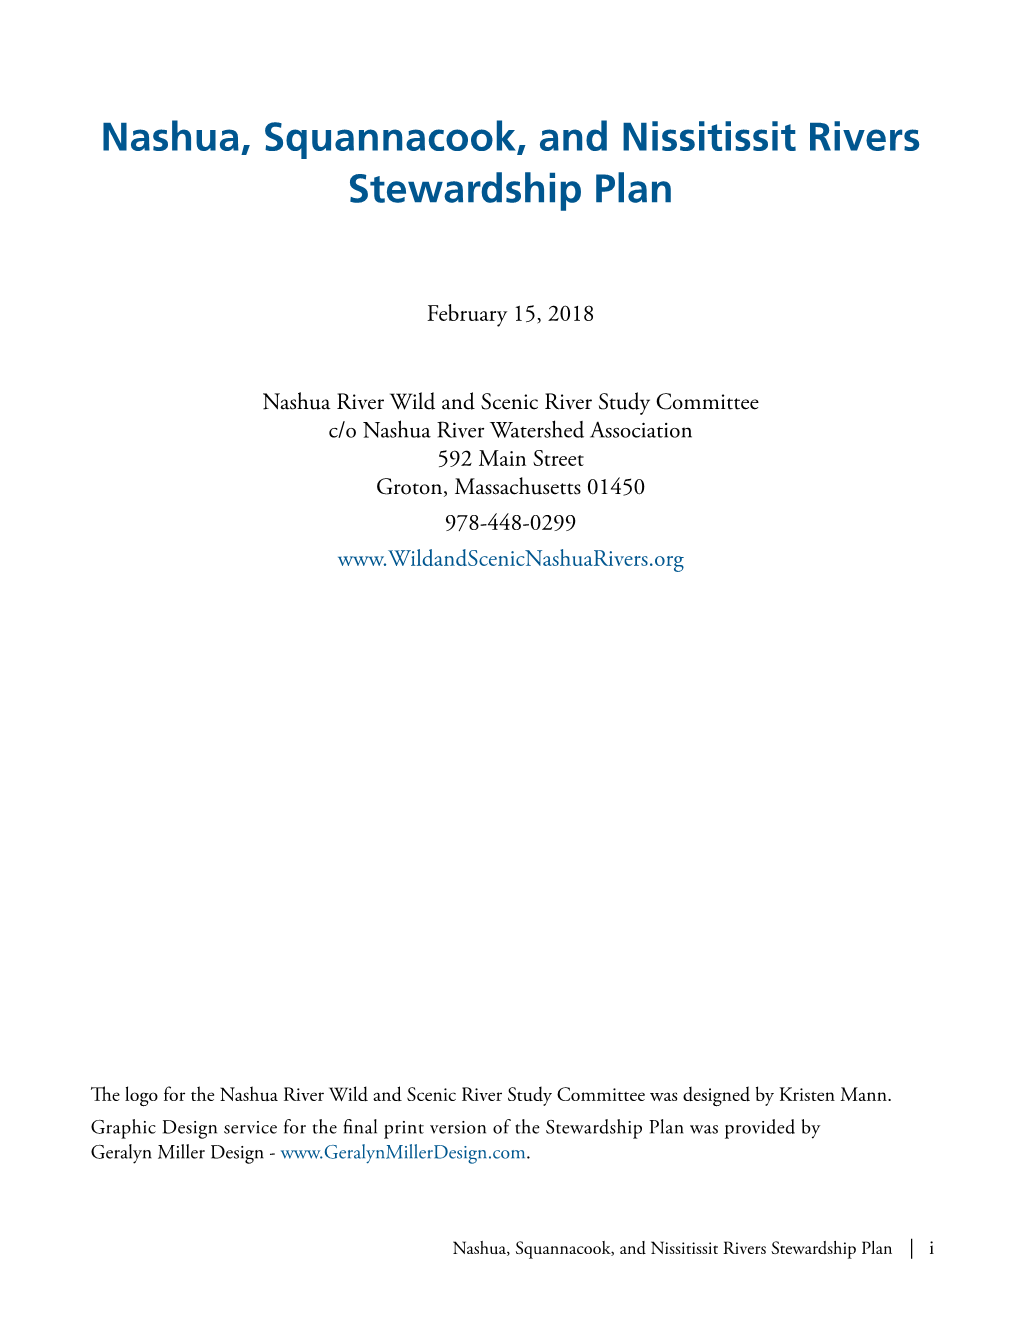 Nashua, Squannacook, and Nissitissit Rivers Stewardship Plan